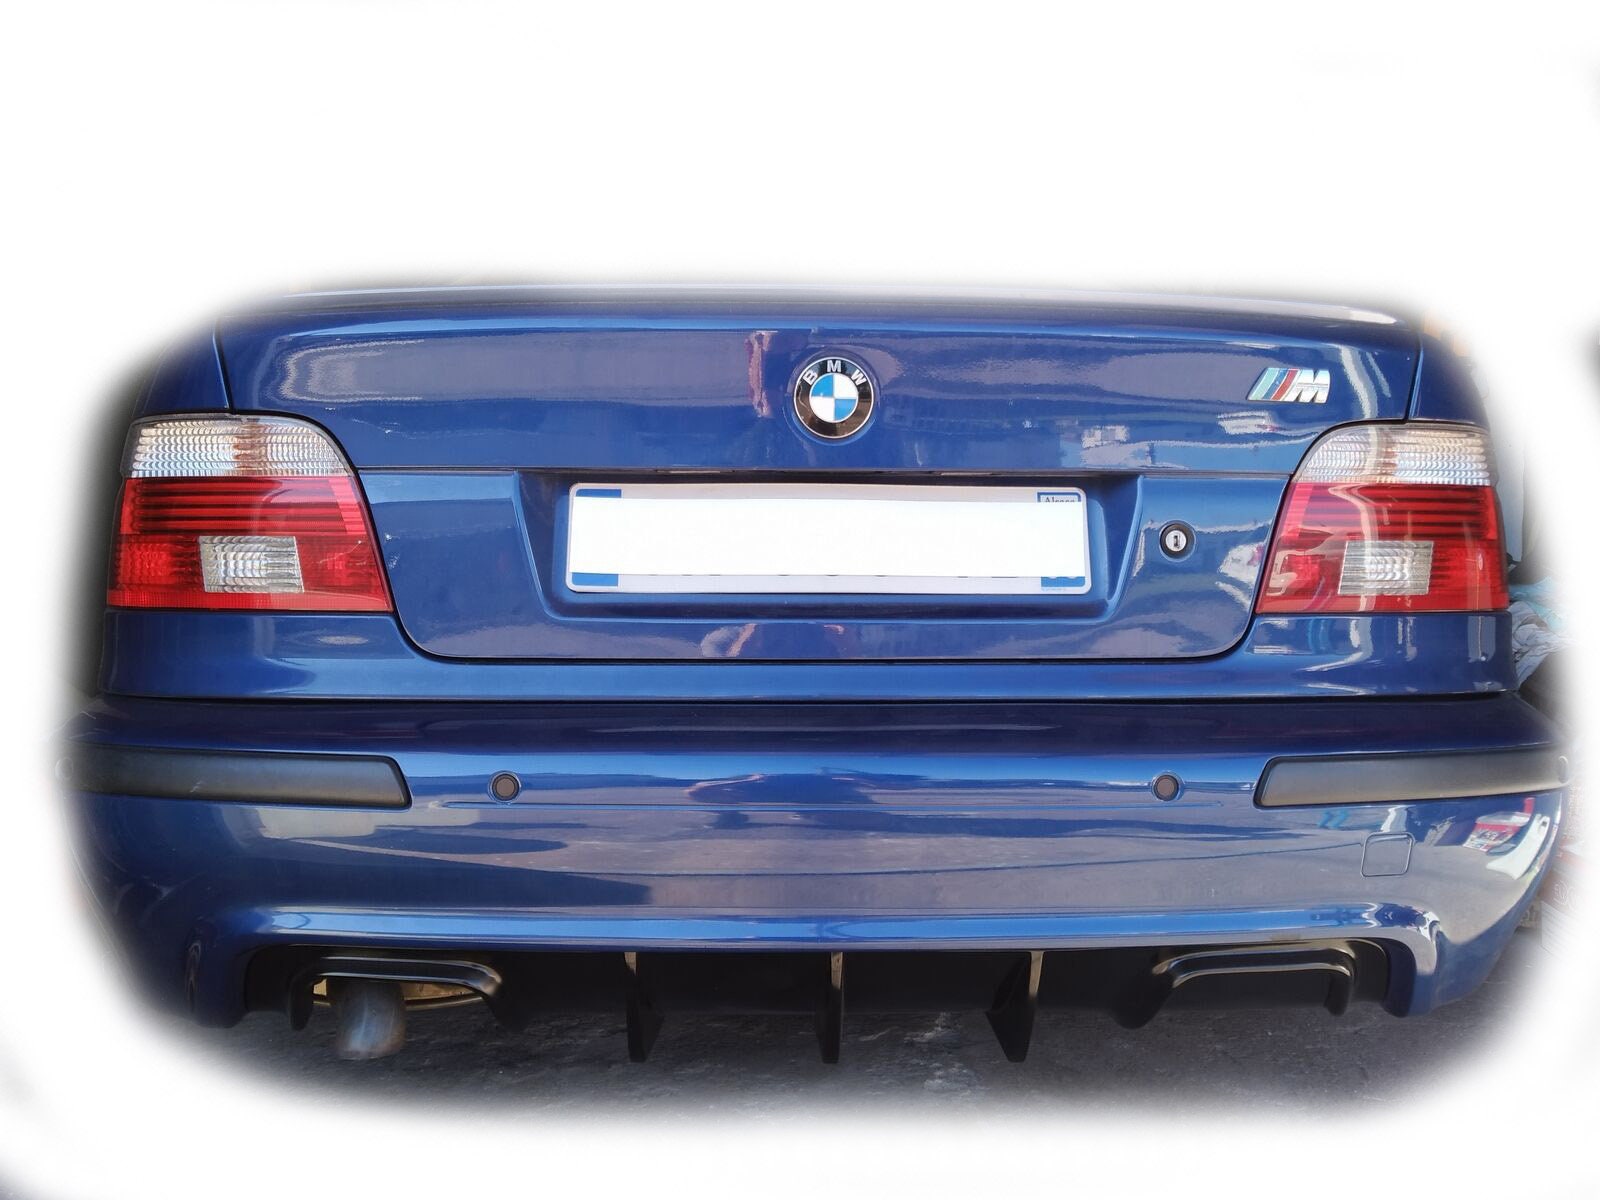 BMW E39 Heckstoßstange Diffusor Lip Splitter M5 Spoiler FÜR 1 oder 2  Auspuff - .de